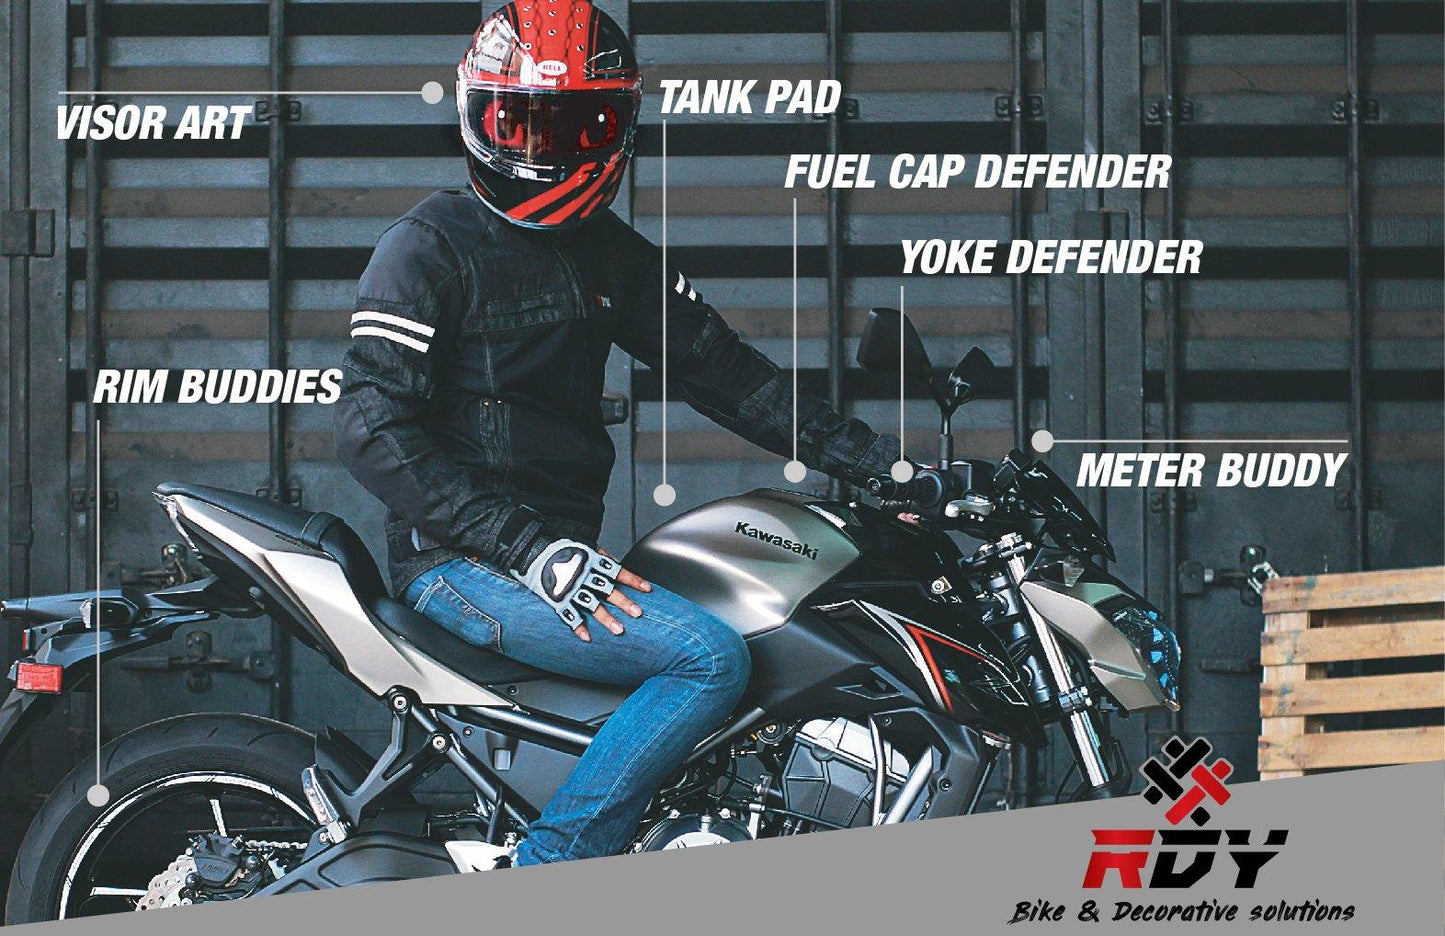 RDY Yoke Defender fits for Honda VTR 1000) - Durian Bikers